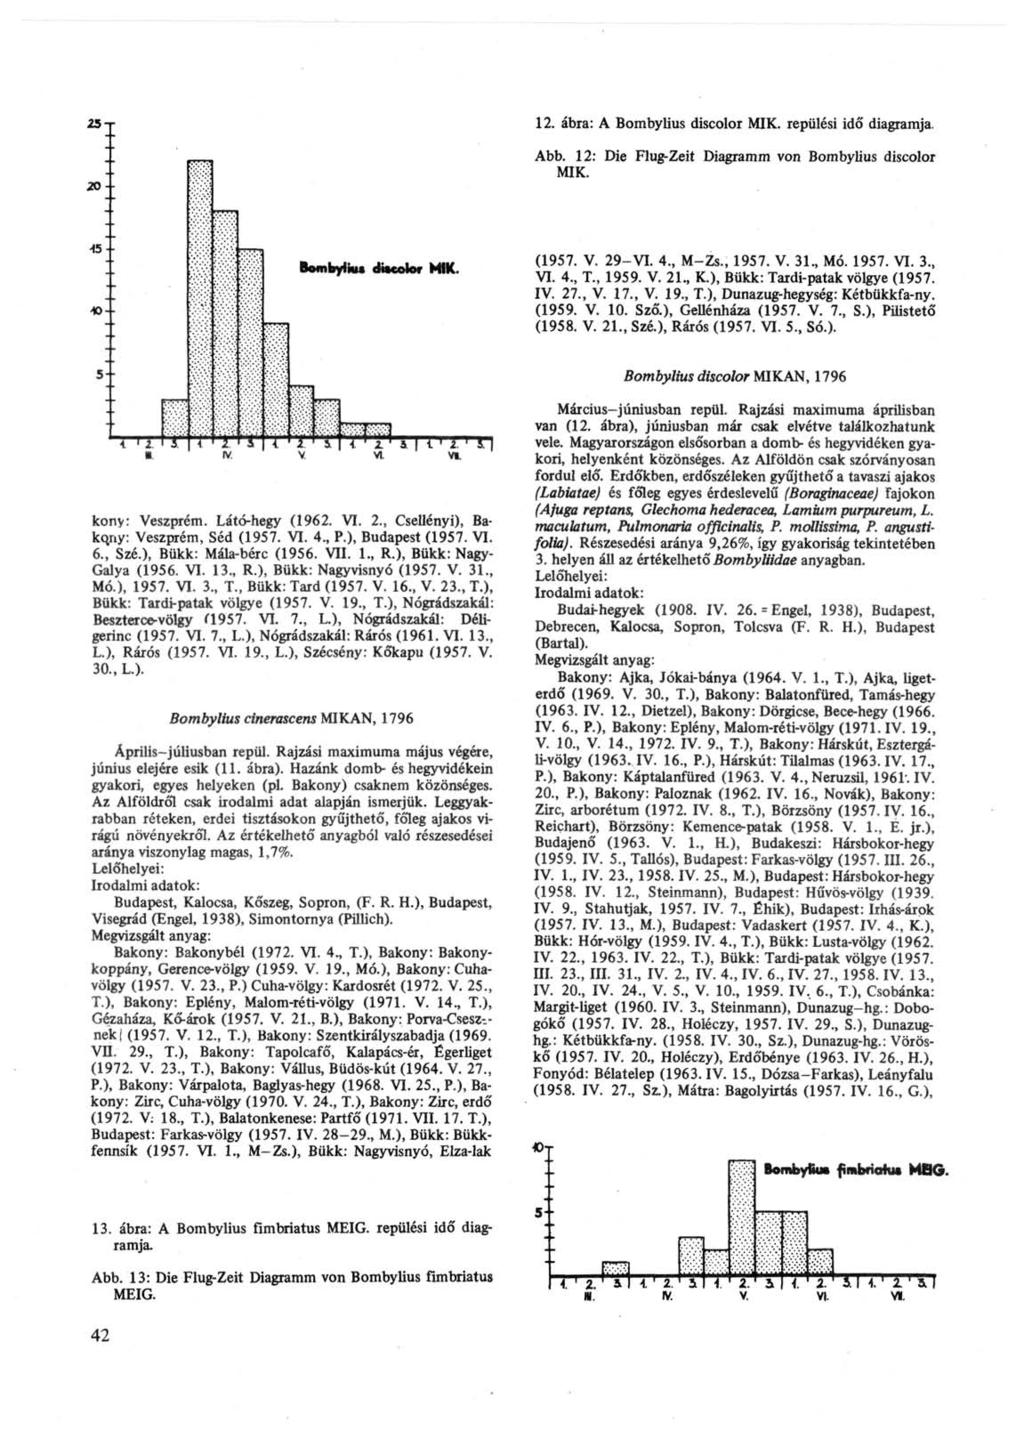 12. ábra: A Bombylius discolor MIK. repülési idő diagramja. Abb. 12: Die Flug-Zeit Diagramm von Bombylius discolor MIK. (1957. V. 29-VI. 4., M-Zs., 1957. V. 31., Mó. 1957. VI. 3., VI. 4., T., 1959. V. 21.